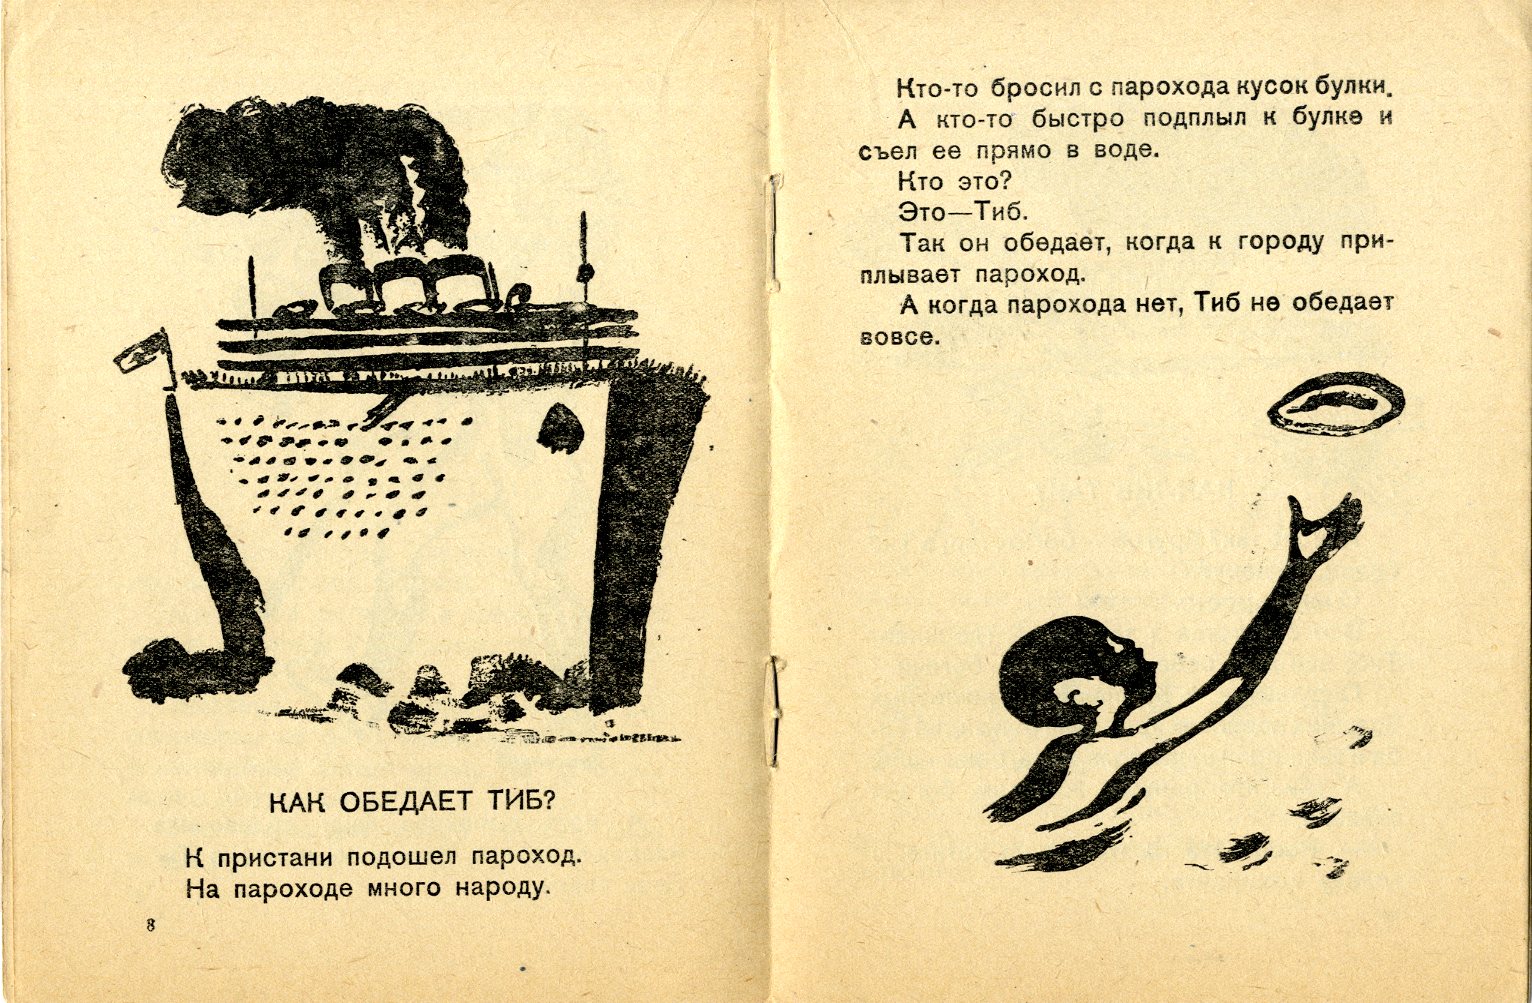 ЮРИЙ СЫРНЕВ П. ЖУЛЕВ, «КАК ЖИВЕТ ТИБ» ОГИЗ – Молодая гвардия, 1932 г.